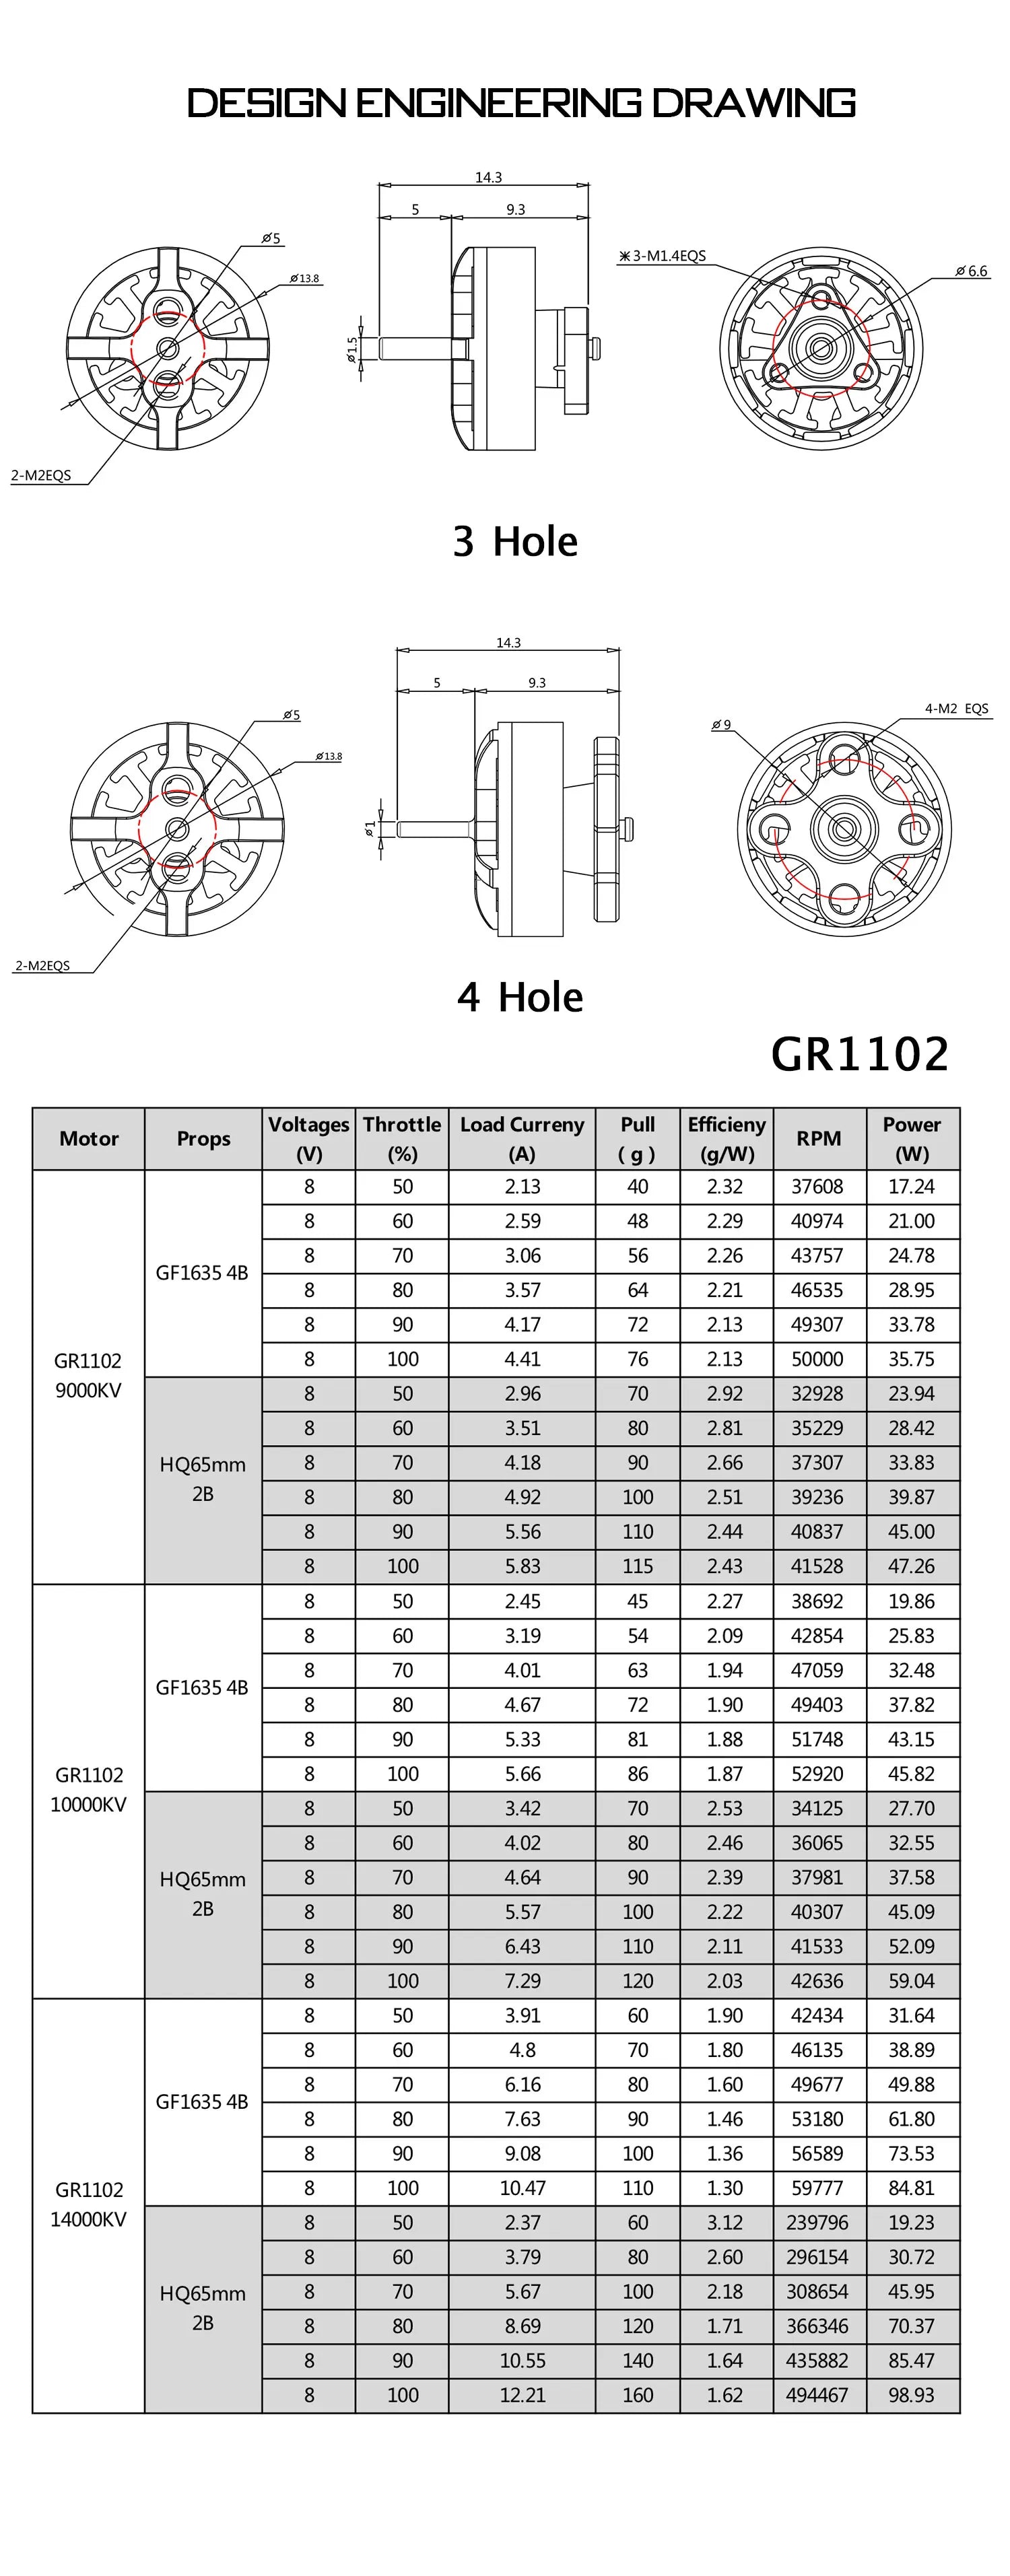 GEPRC GR1102 Motor, GR1102 is mainly designed for Toothpick frame and Whoop frame,